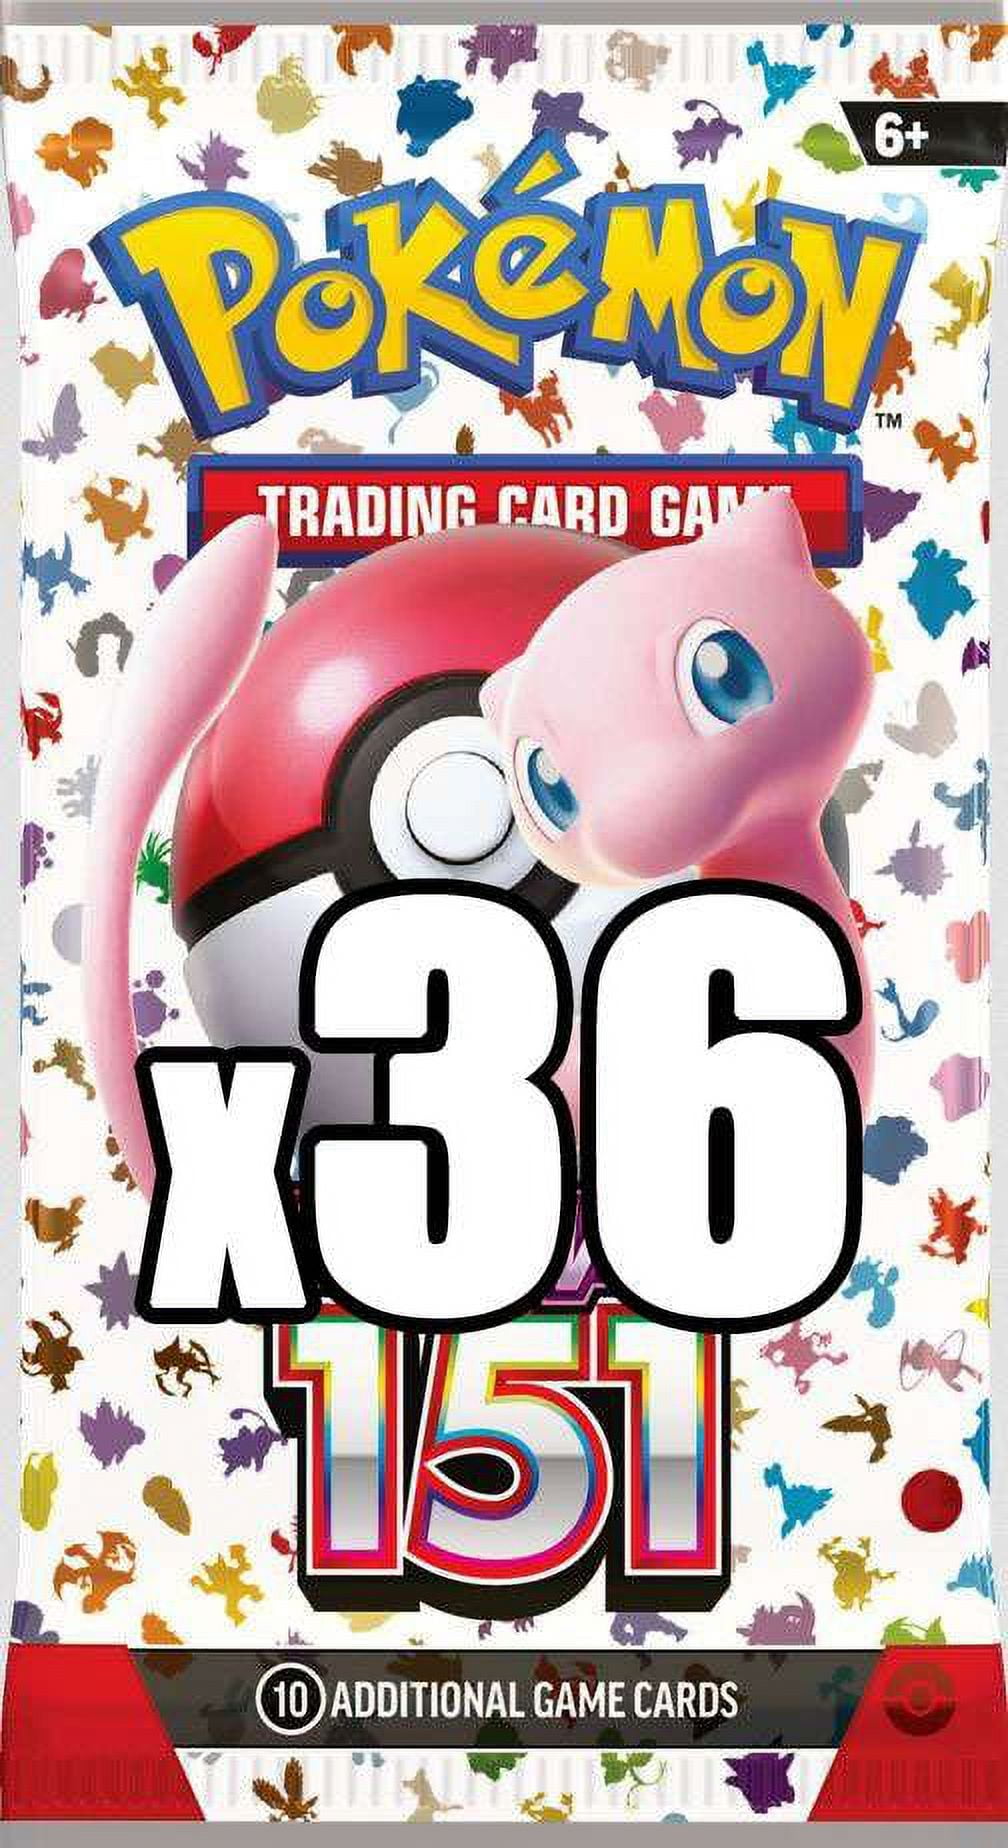 Venusaur ex, Charizard ex, Blastoise ex, and More Revealed from Pokemon  Card 151! 